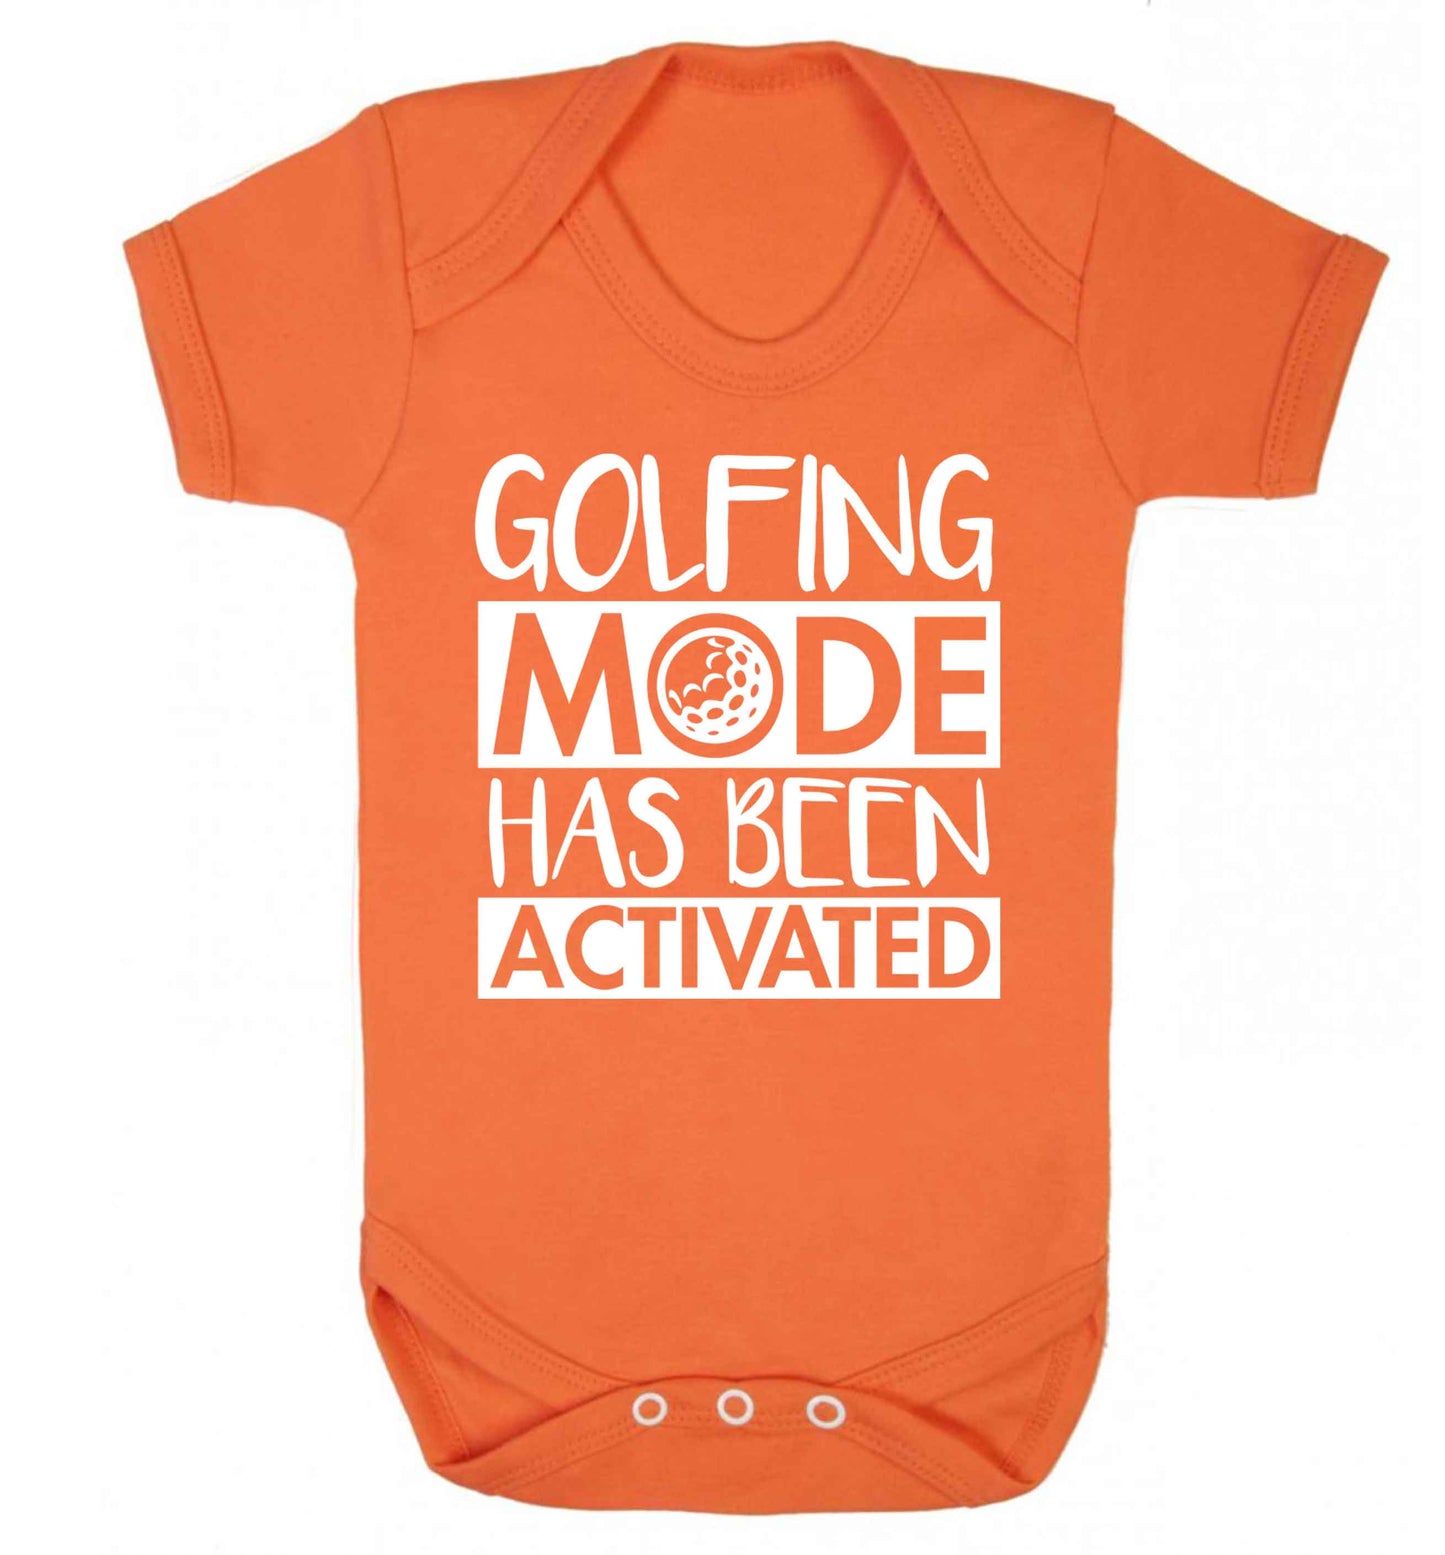 Golfing mode has been activated Baby Vest orange 18-24 months